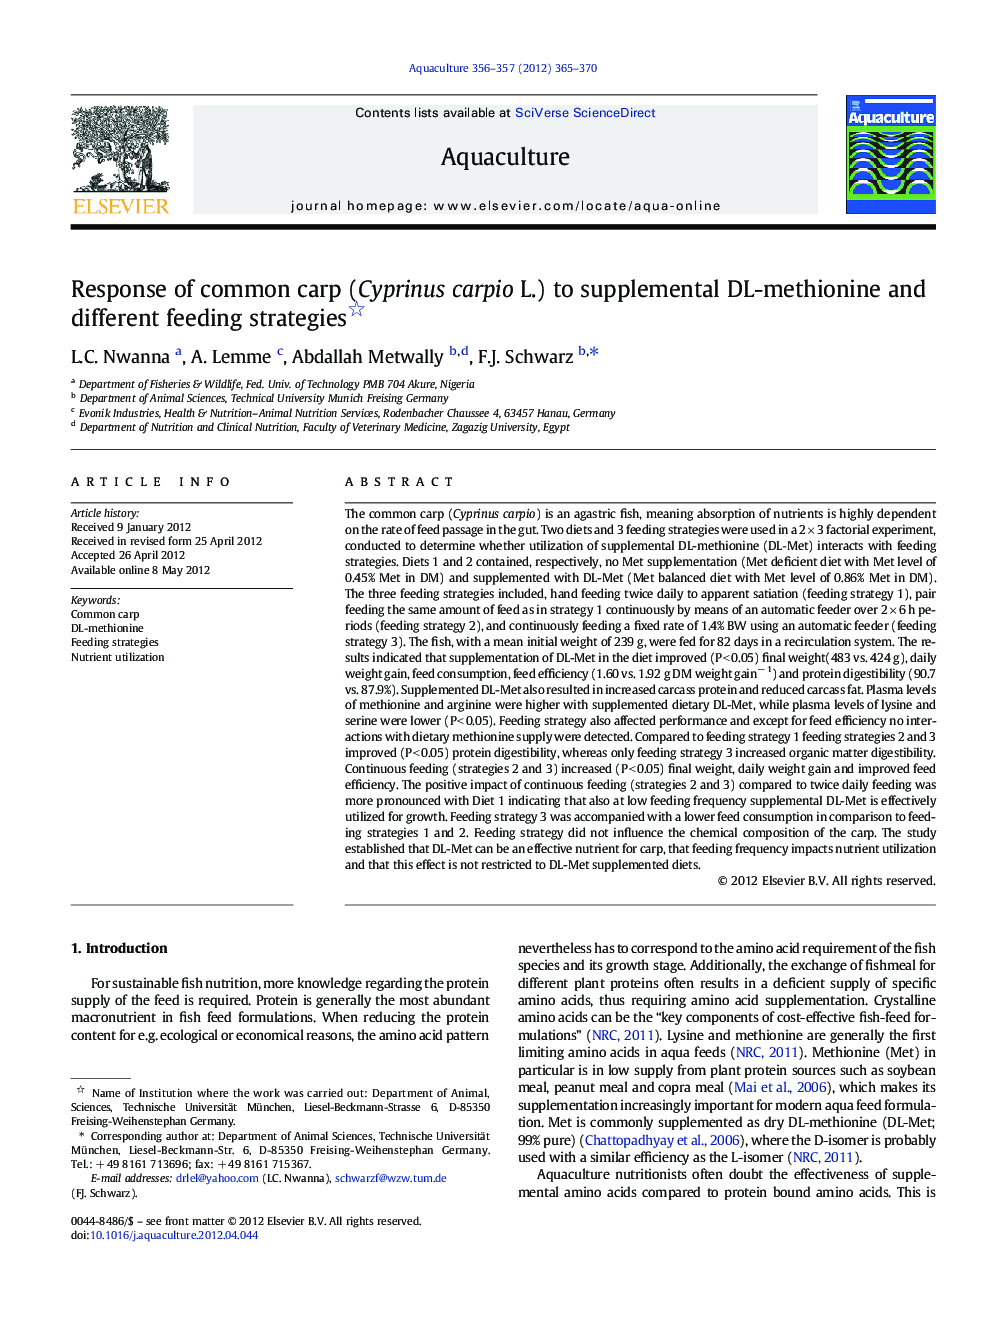 Response of common carp (Cyprinus carpio L.) to supplemental DL-methionine and different feeding strategies 